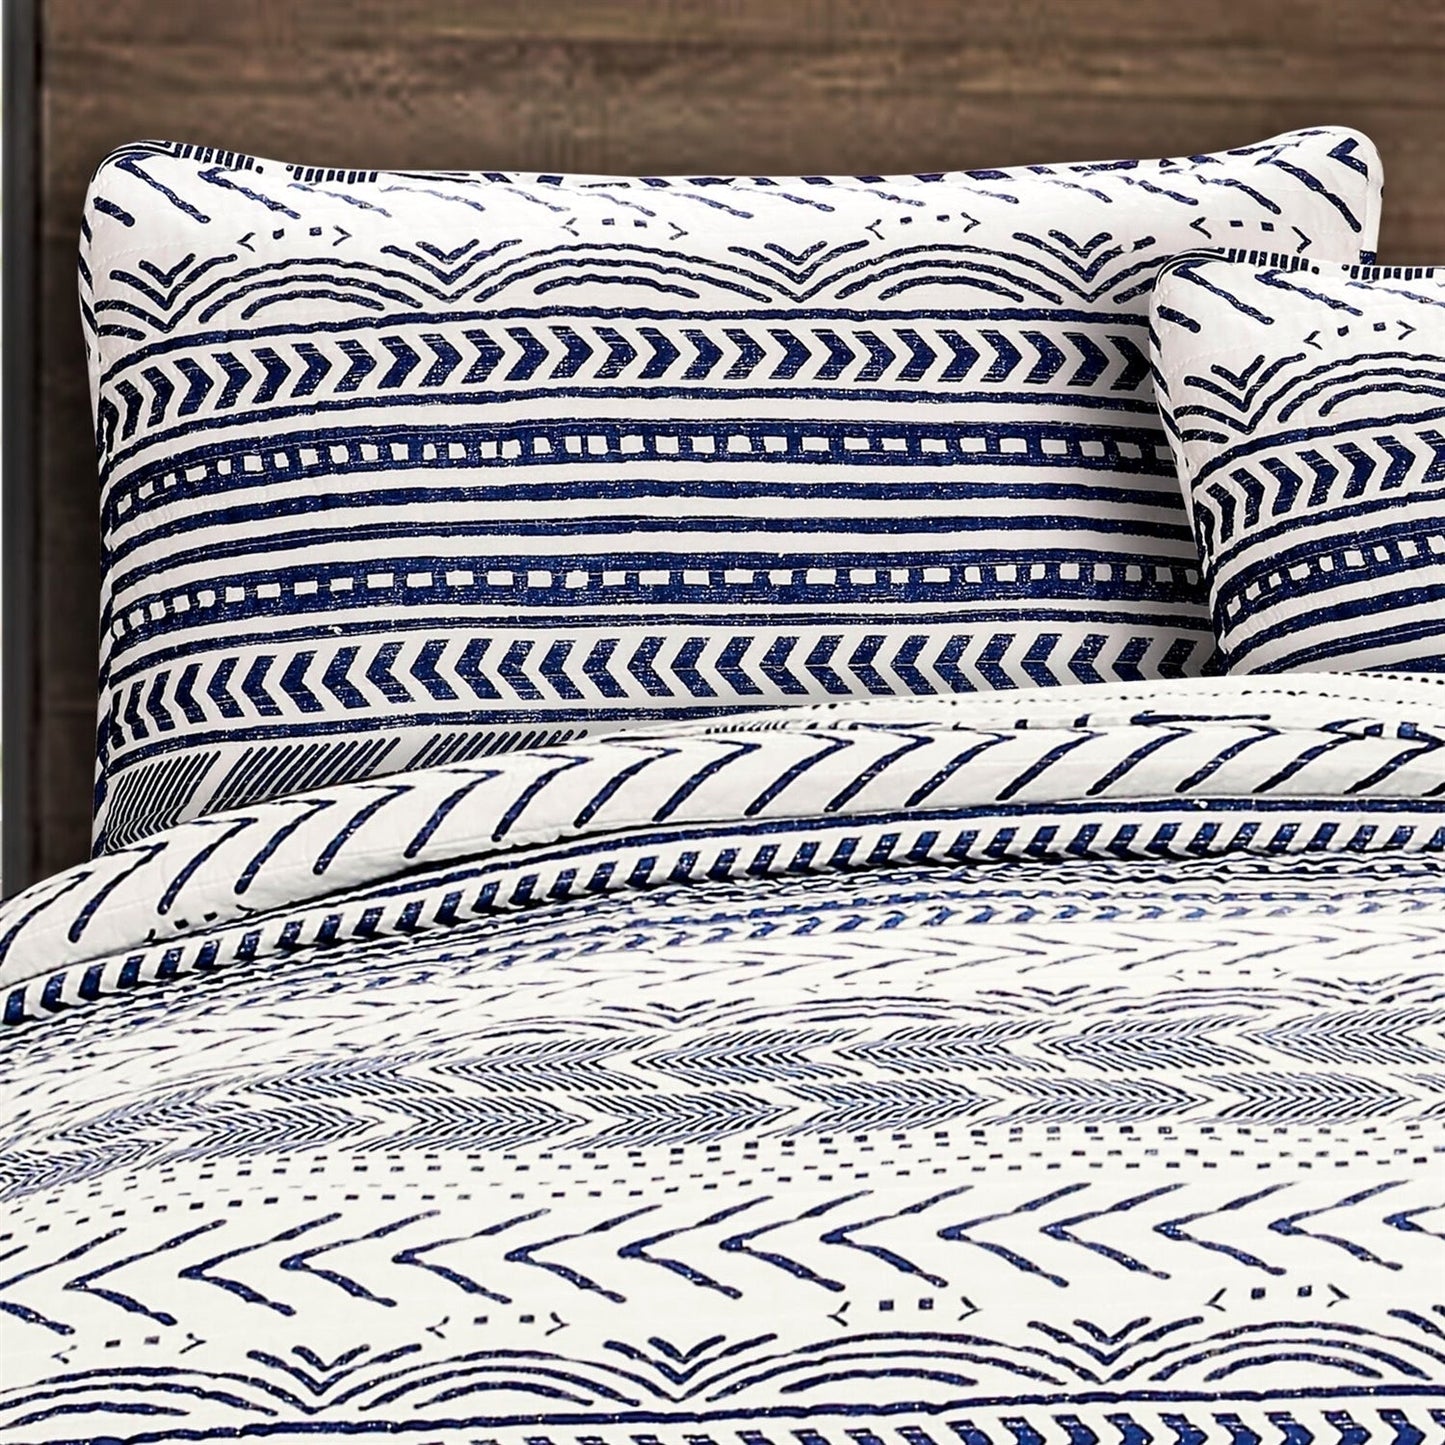 Bedroom > Quilts & Blankets - 3 Piece Scandinavian Blue White Reversible Cotton Set In Full/Queen